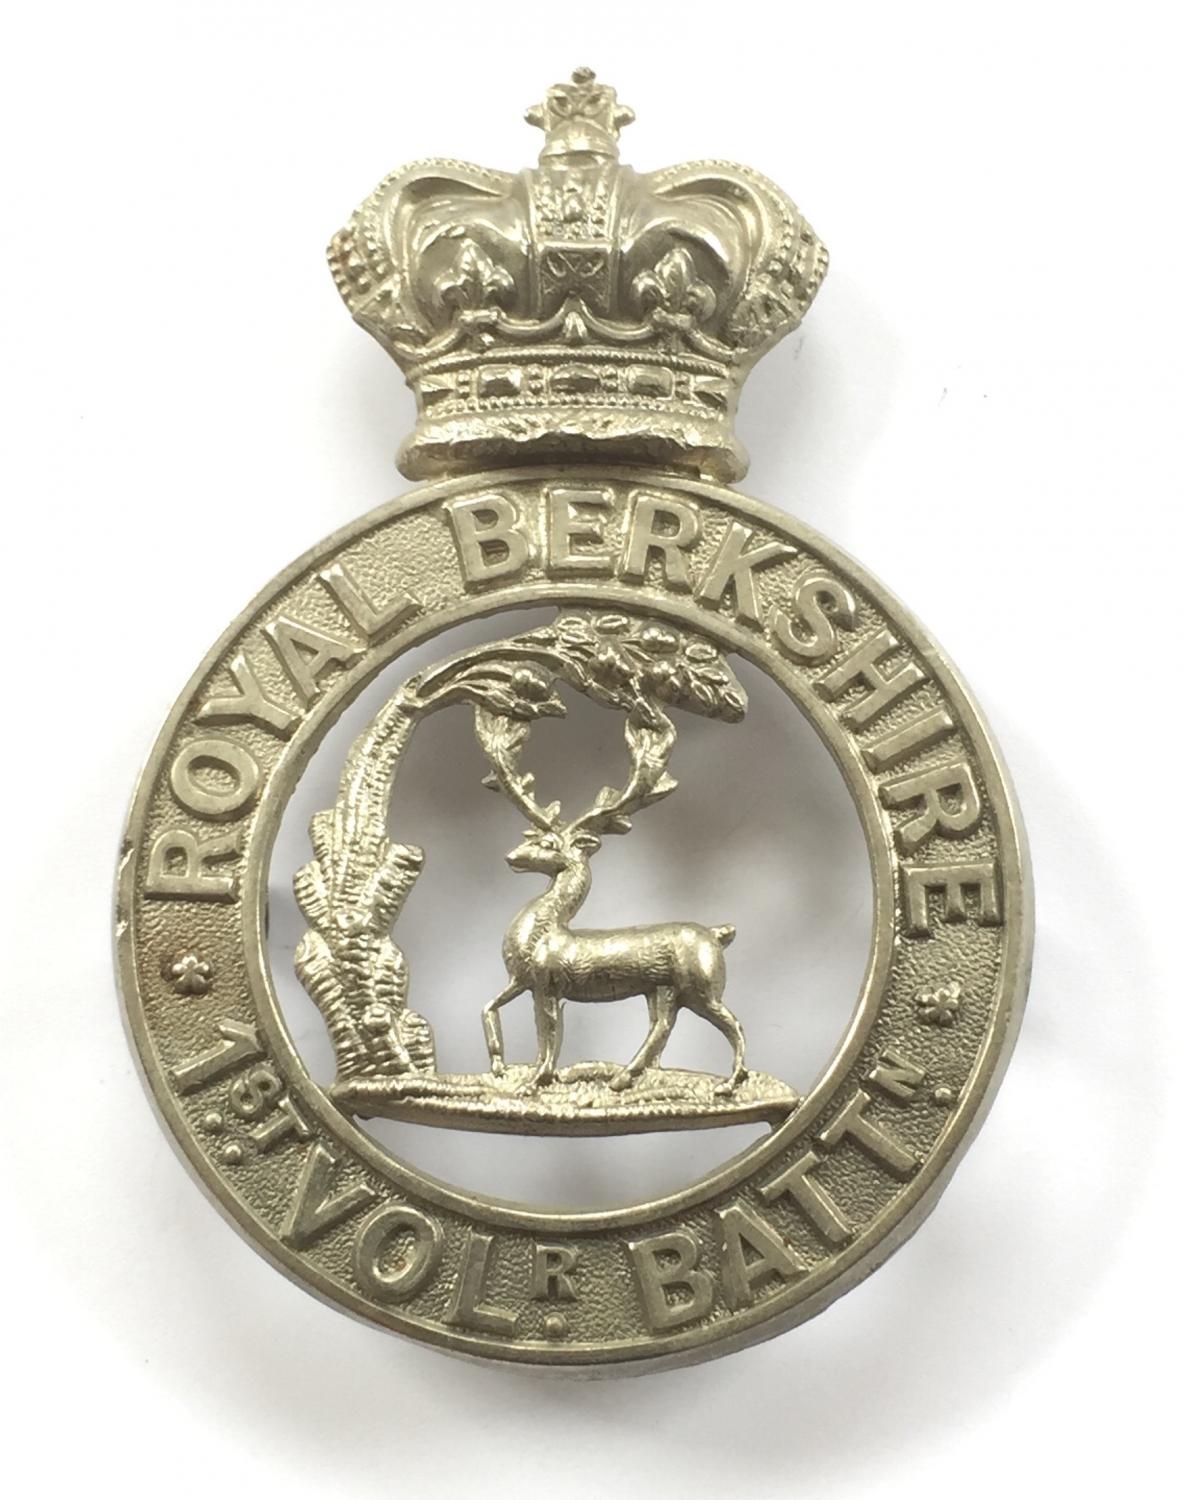 1st (Reading) VB Royal Berkshire Victorian glengarry badge